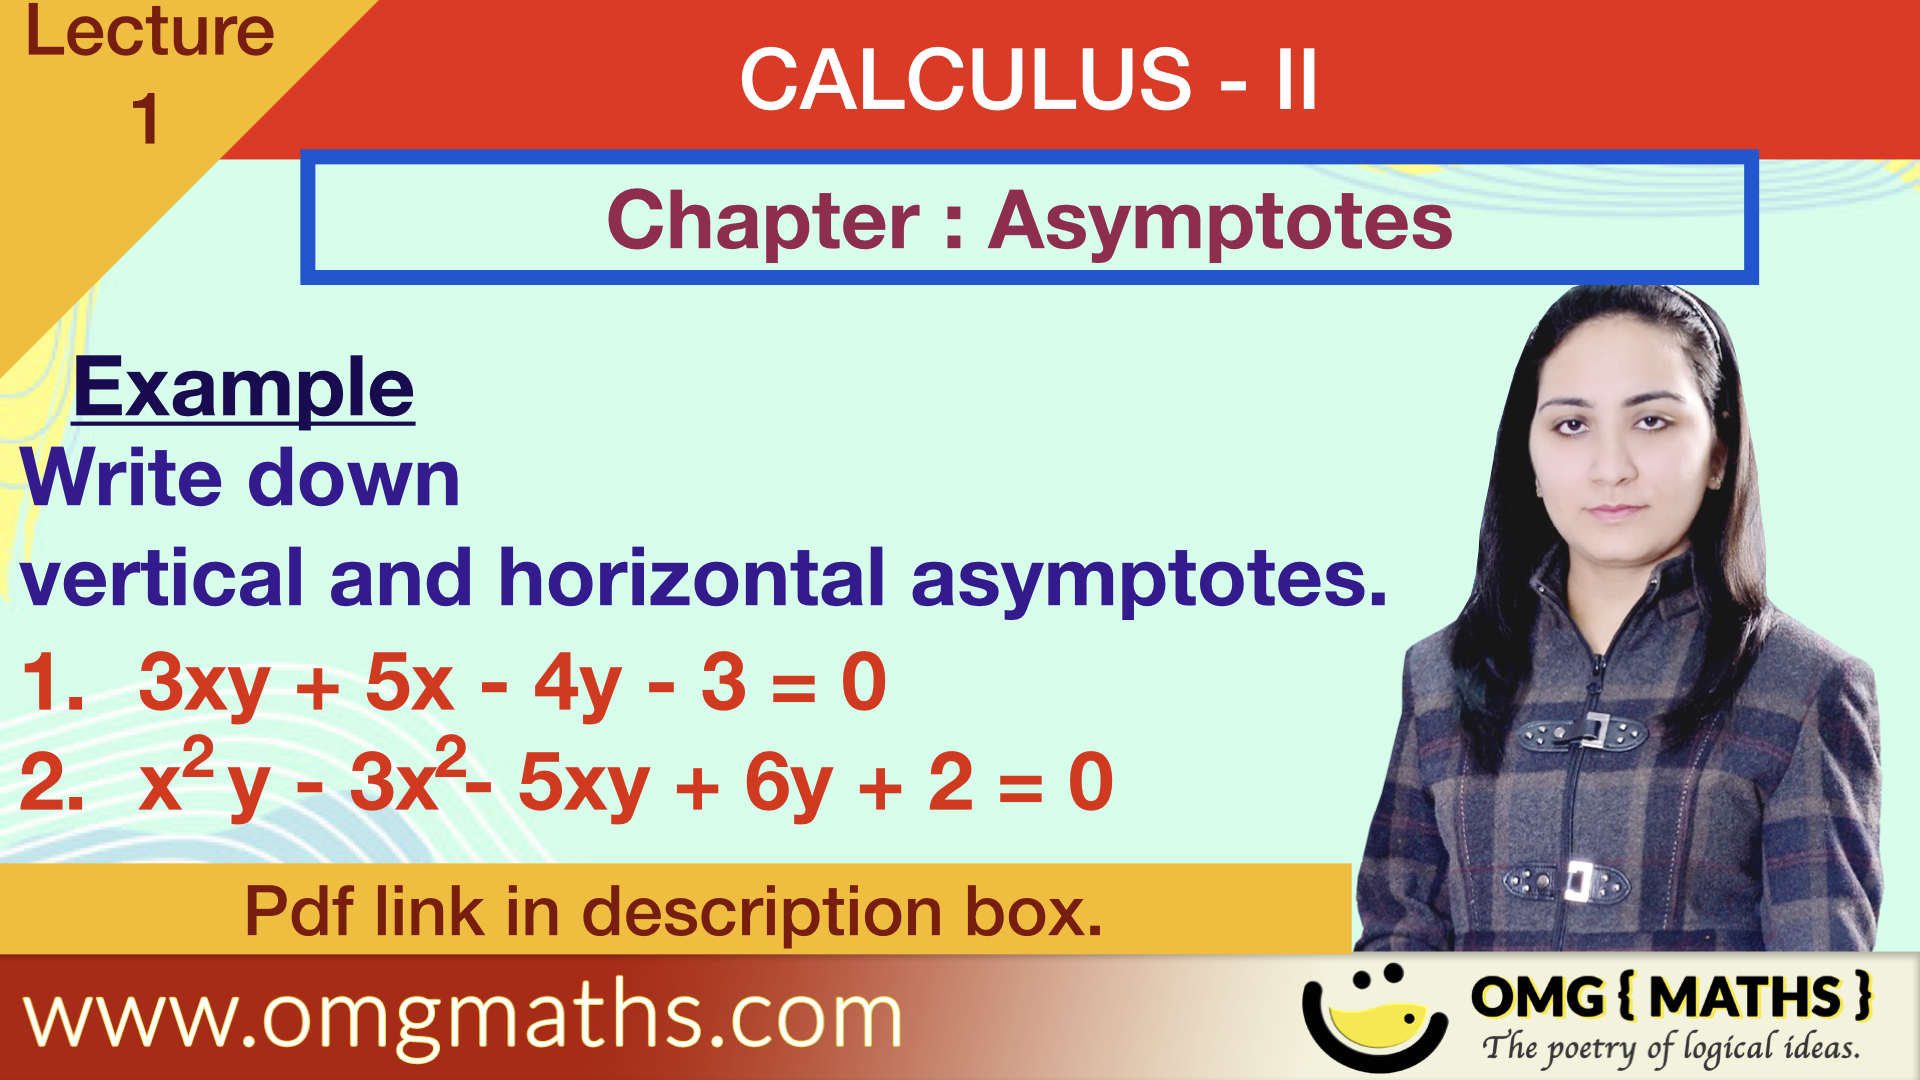 Parallel asymptotes | Rectangular Asymptotes | Asymptotes | Examples | Calculus 2 | Bsc